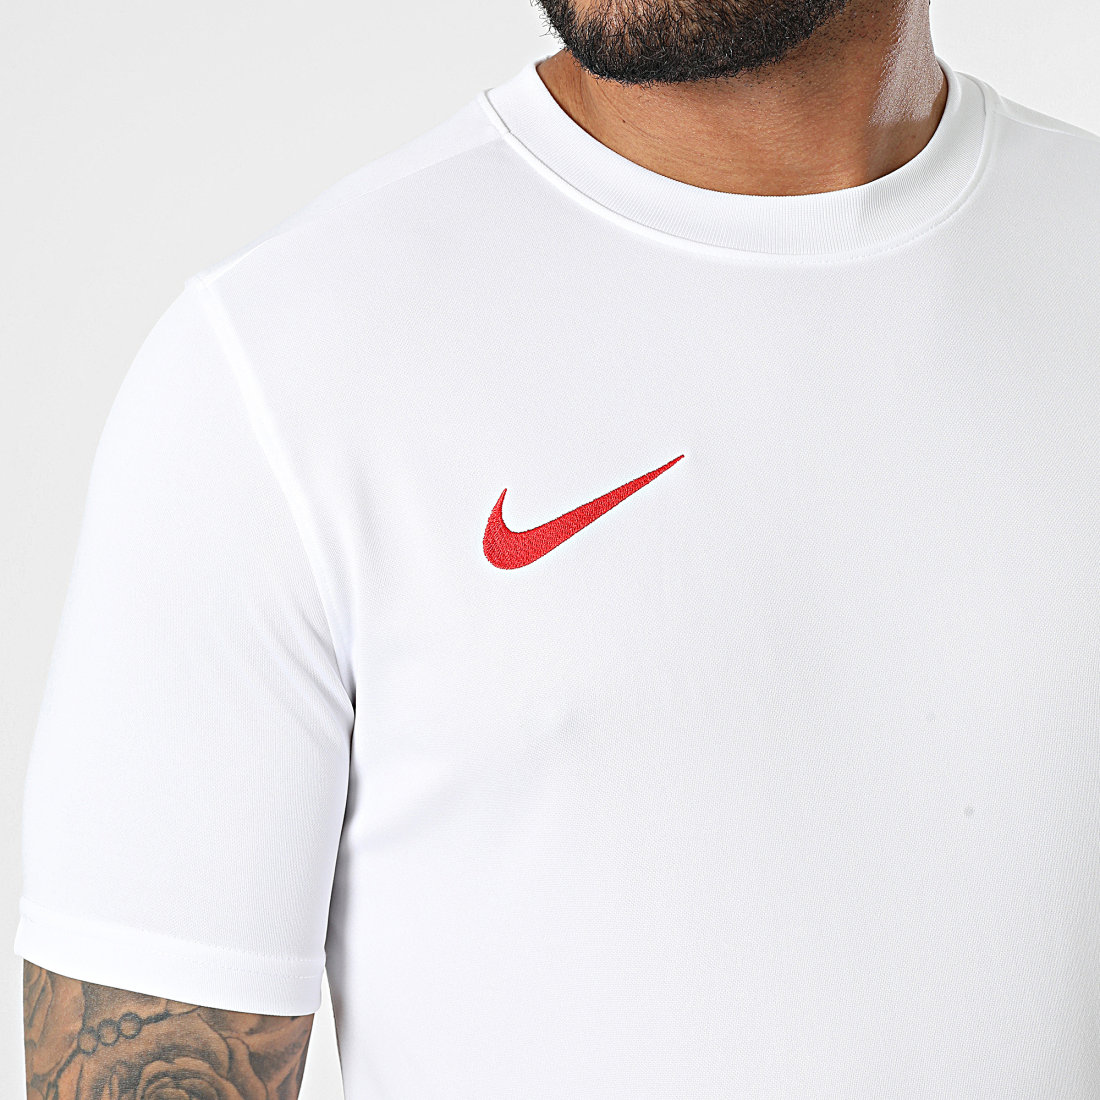 Nike T SHIRT HOMME BLANC/ROUGE